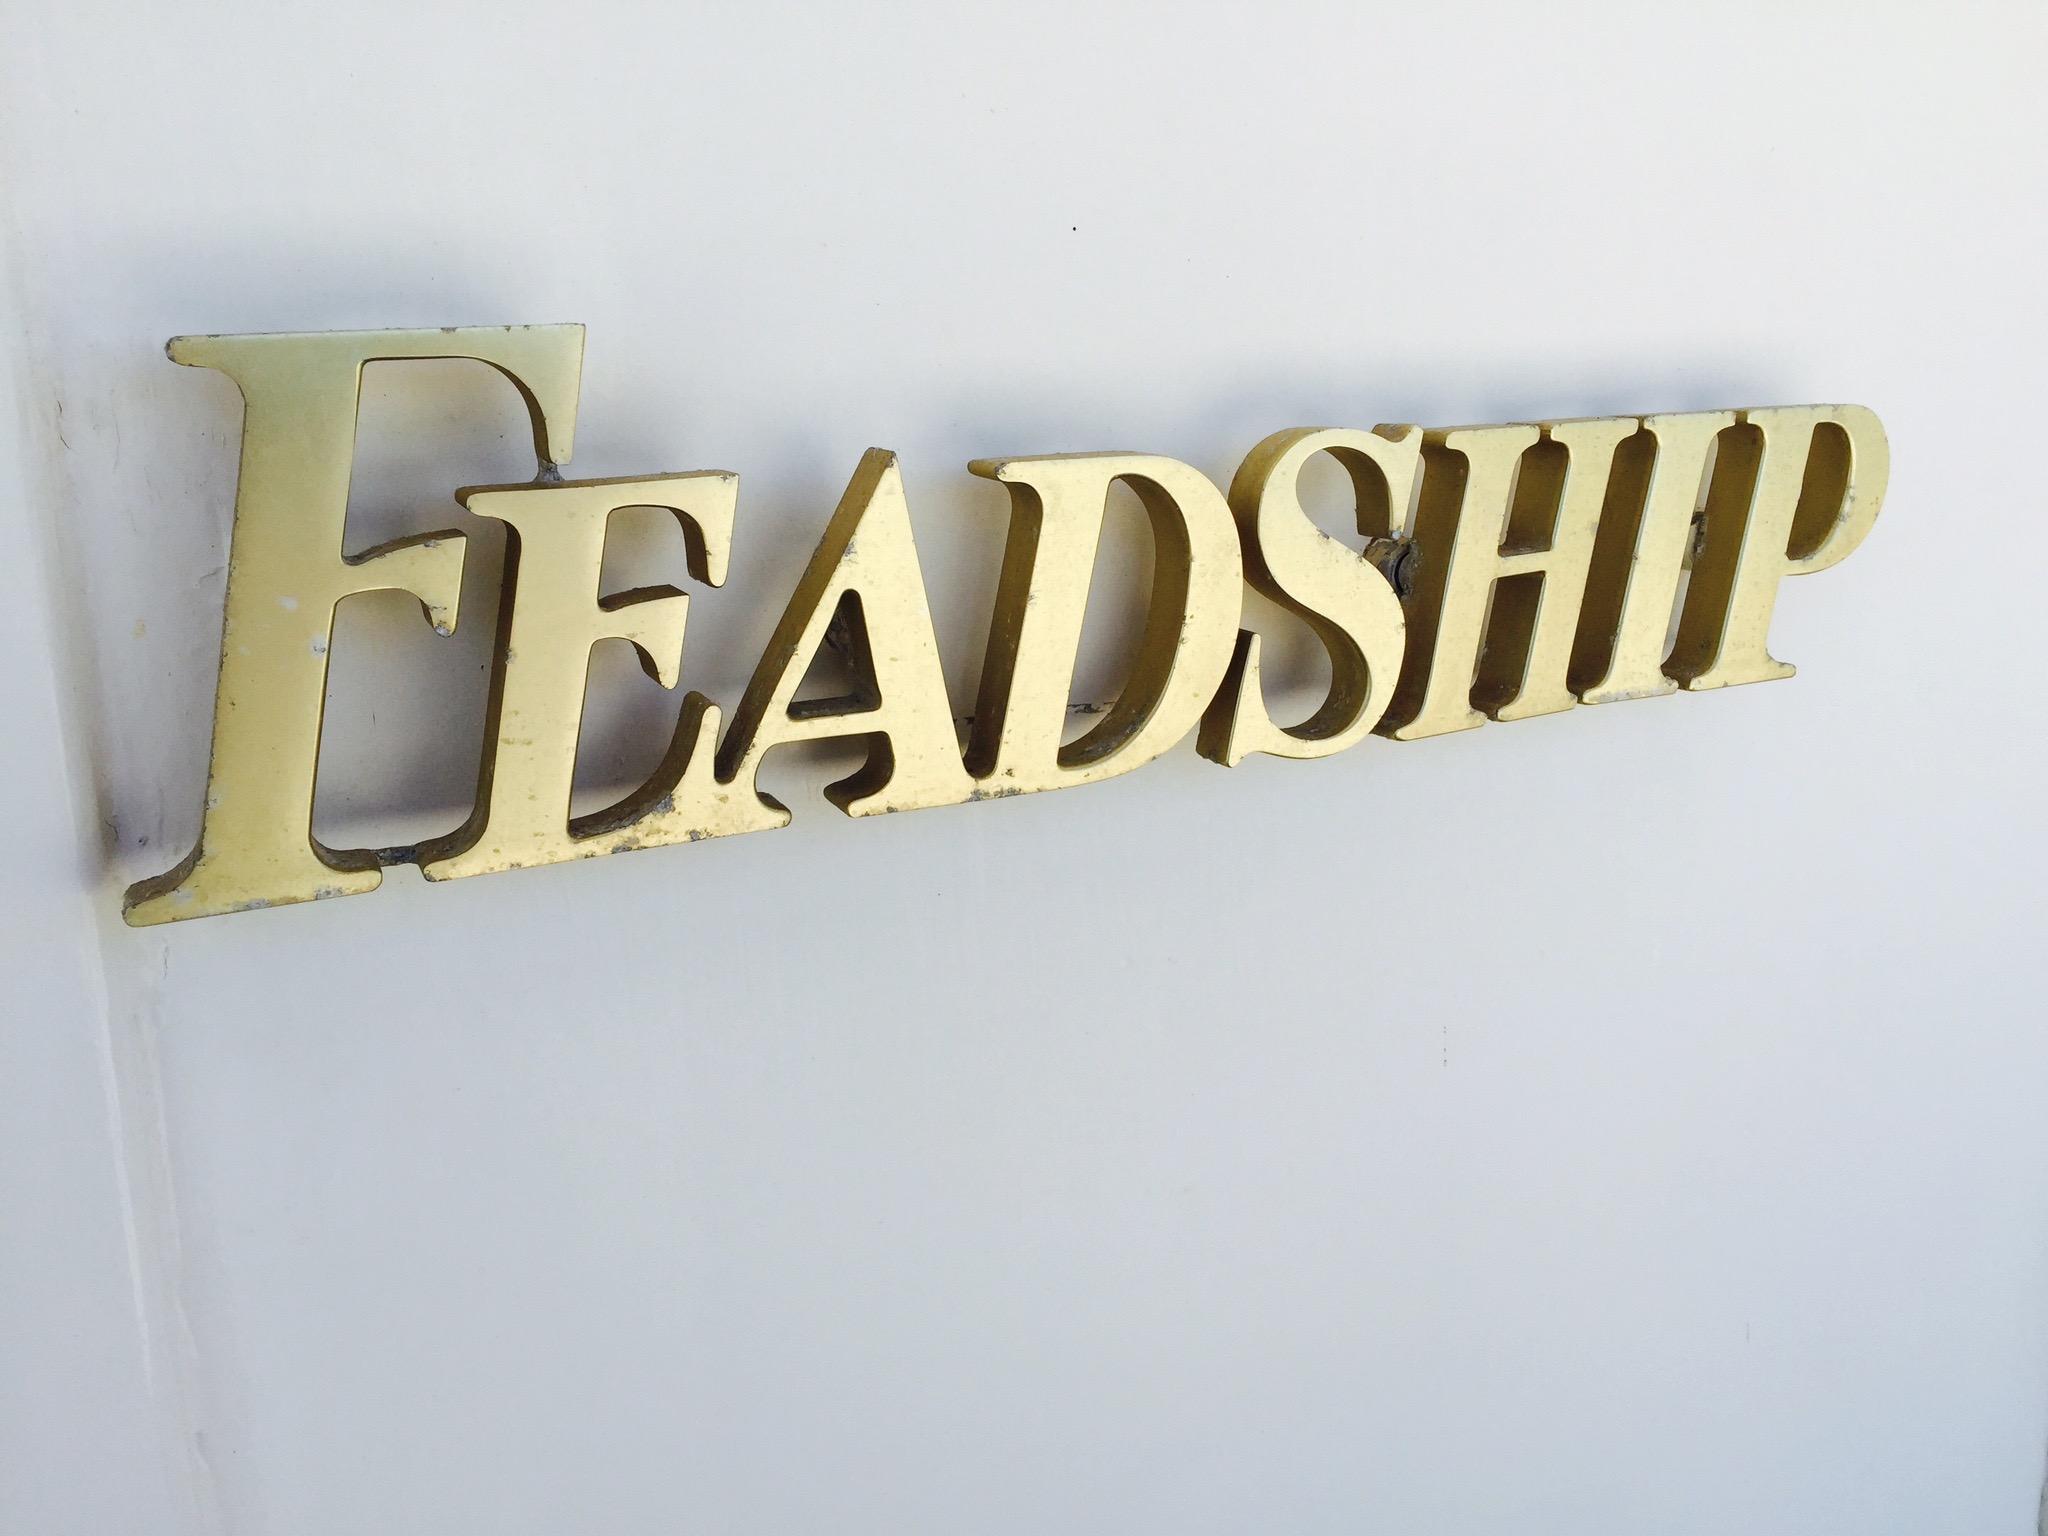 Feadship name board